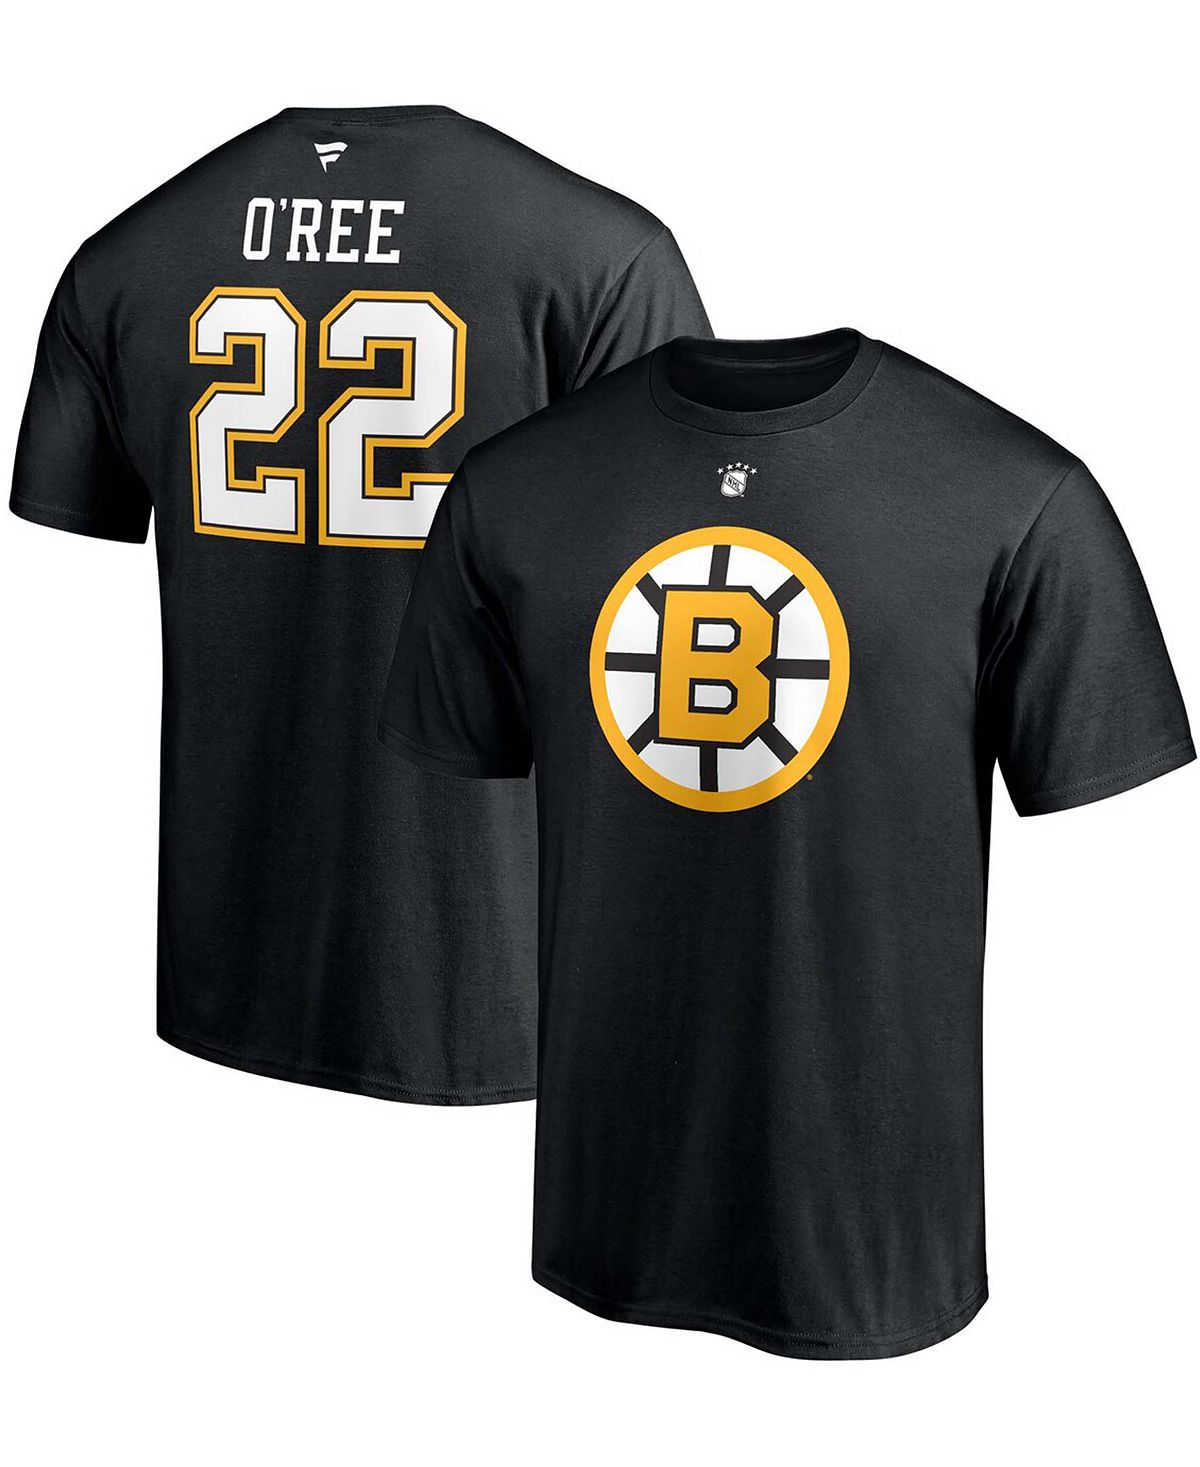 Мужская футболка willie o'ree black boston bruins authentic stack с именем и номером игрока на пенсии Fanatics, черный шайба rubena boston bruins